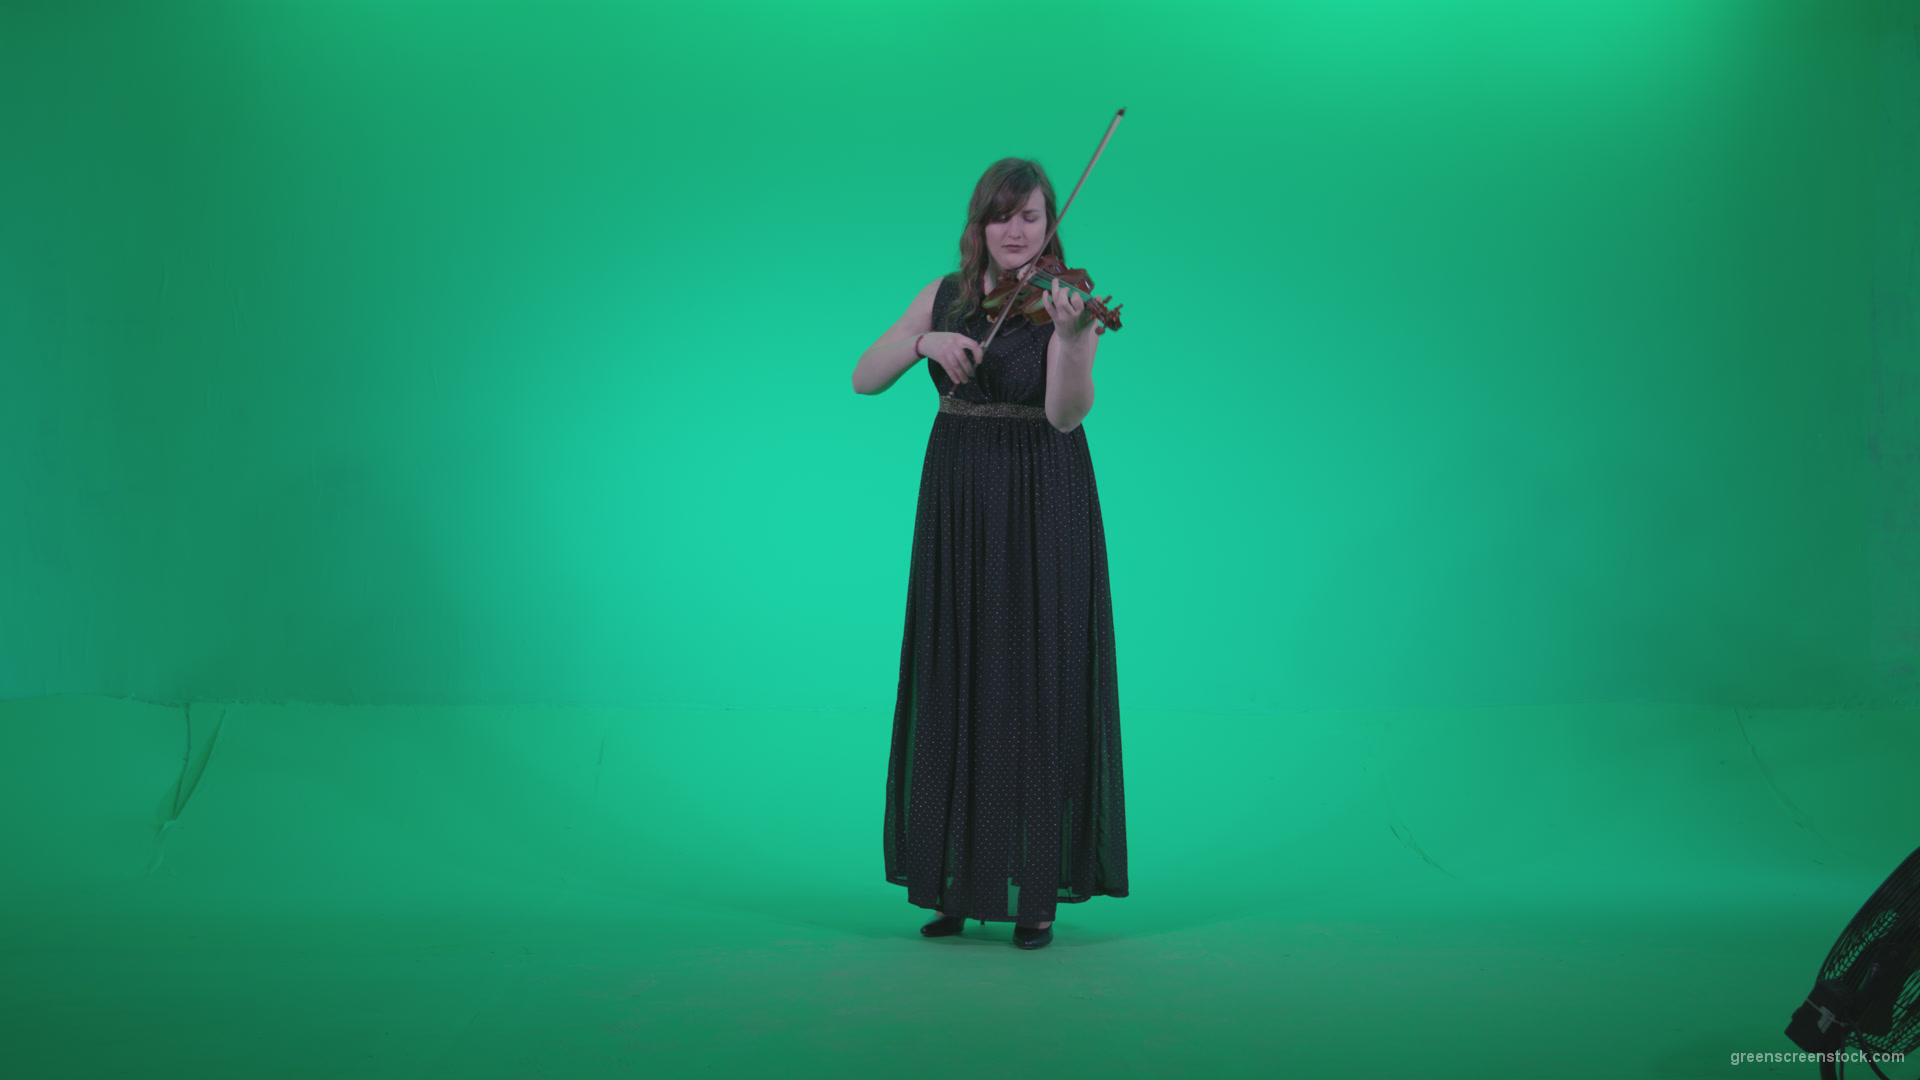 Professional-Violin-player-woman-z1_007 Green Screen Stock